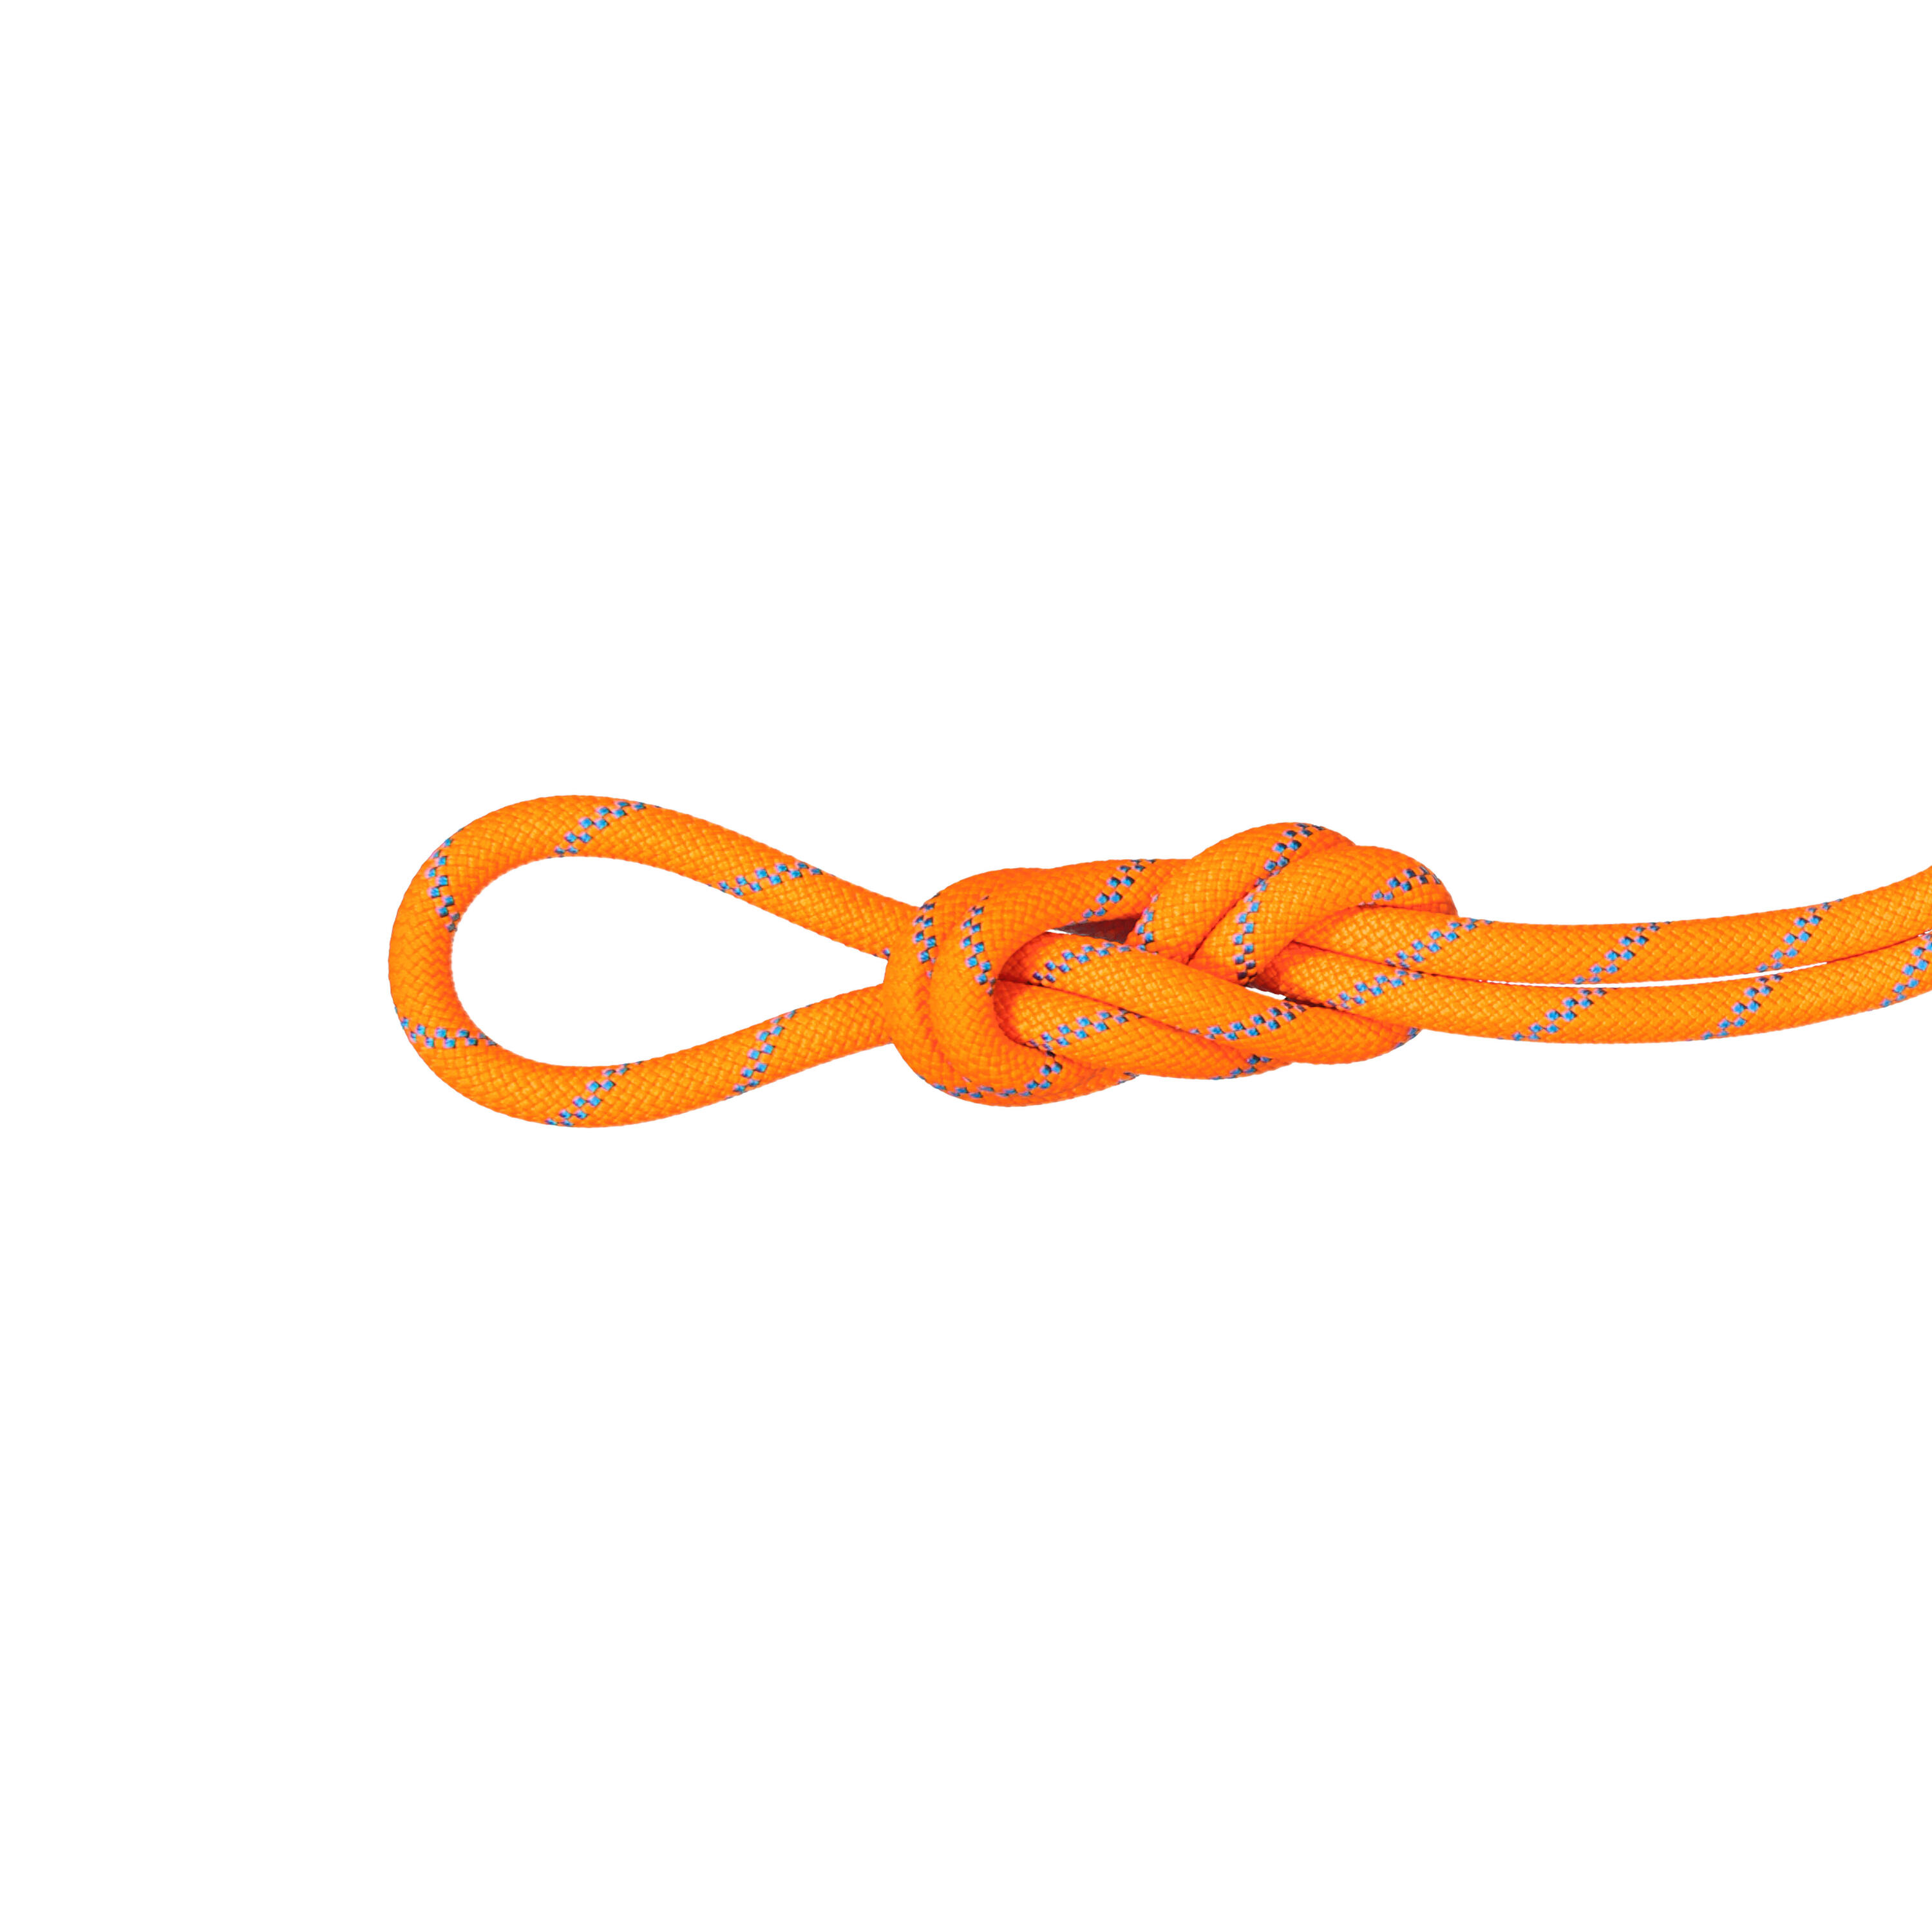 Alpine Sender Dry Triple-Rated Rope 8.7 mm x 40m - Orange MAMMUT